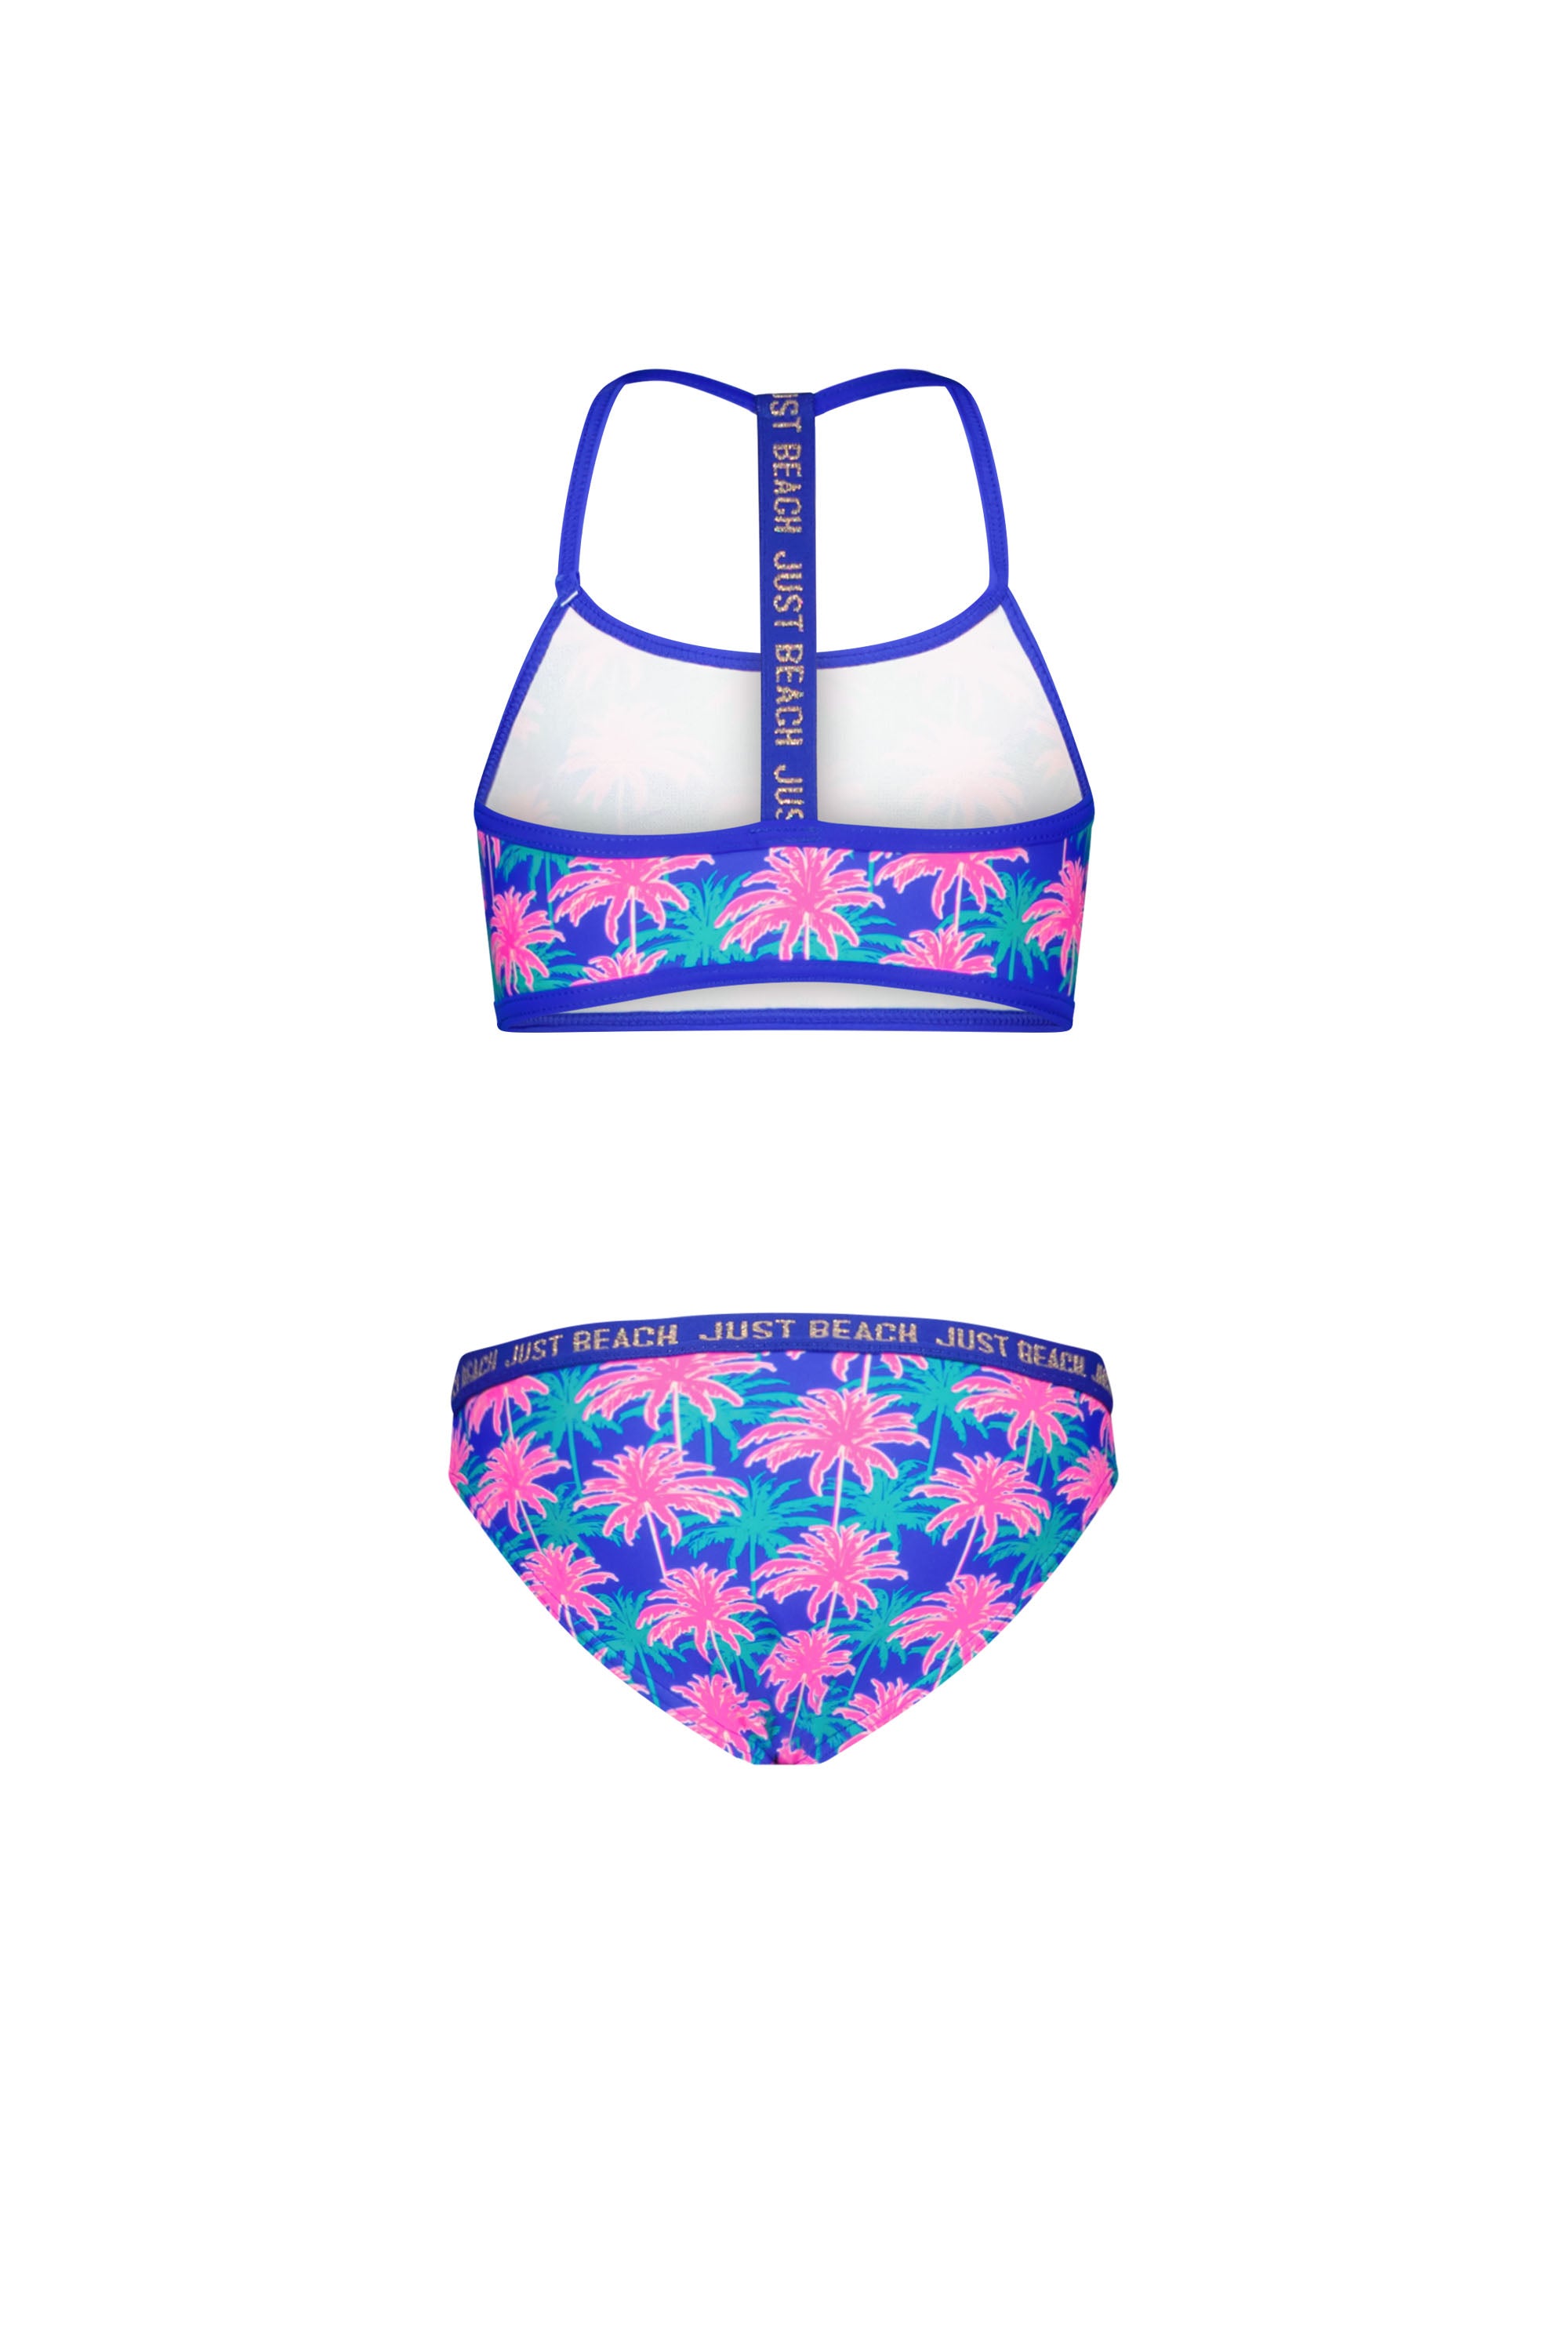 Just Beach Girls tropic aztec bikini with sporty elastic details